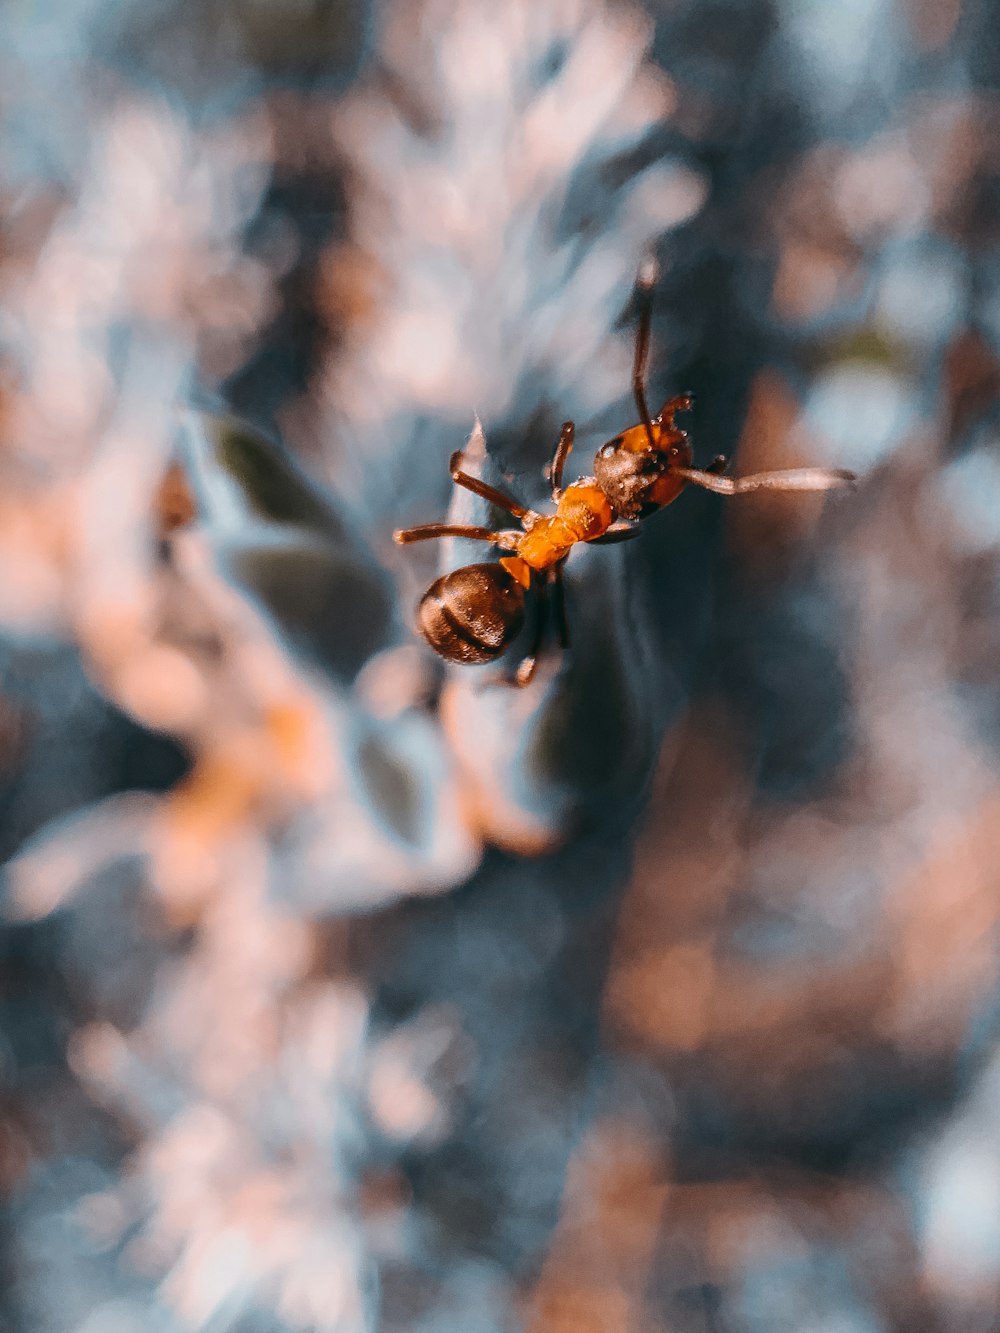 brown ant on brown stem in tilt shift lens